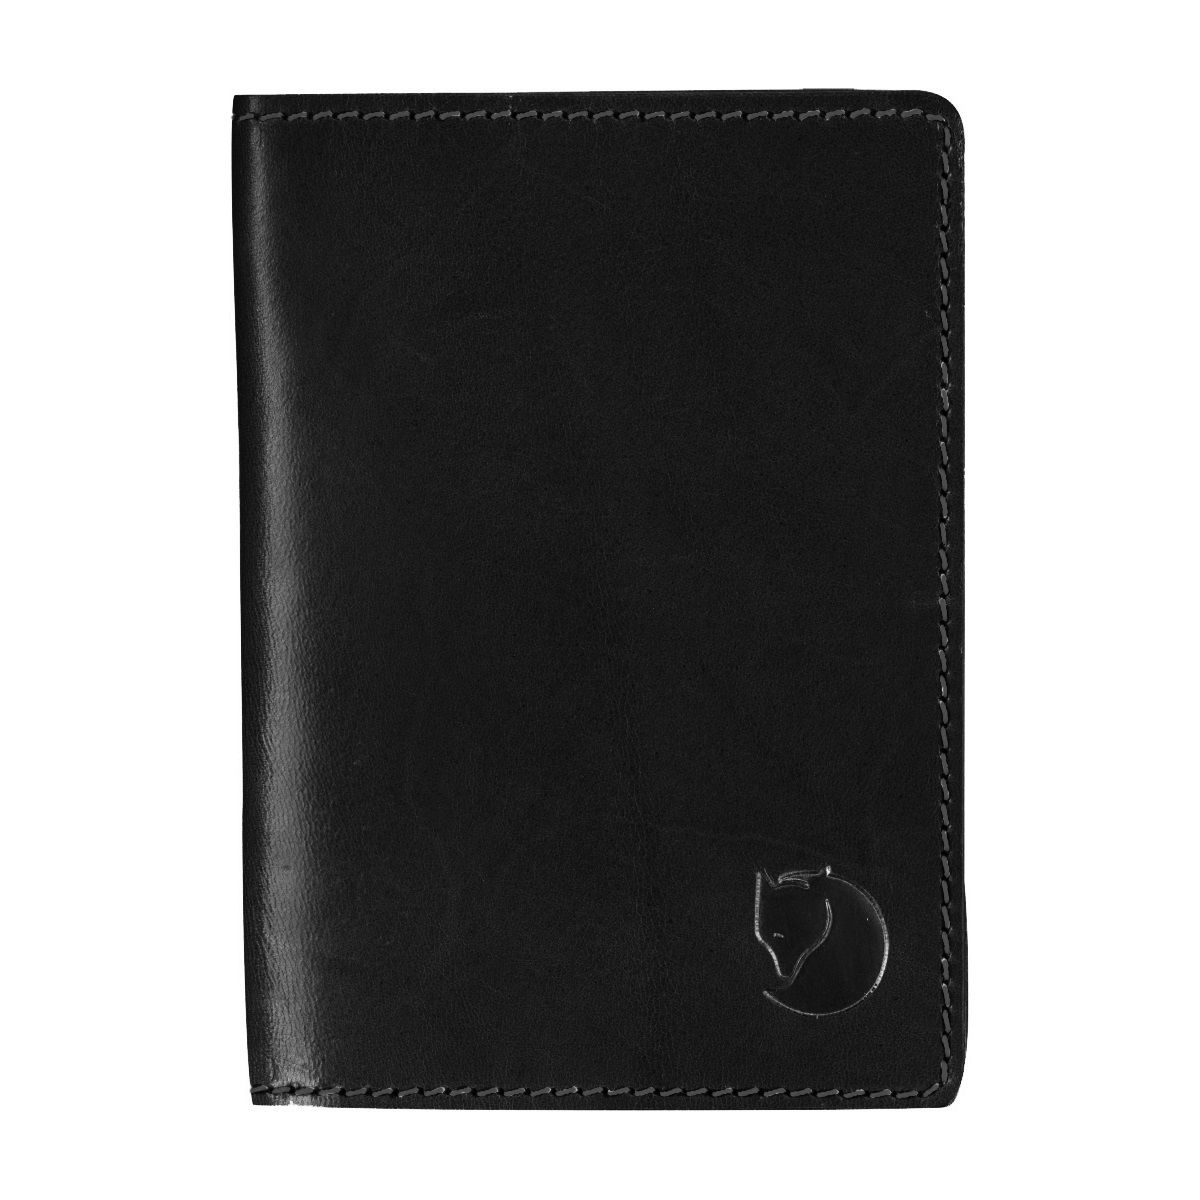 Leather Passport Cover Black